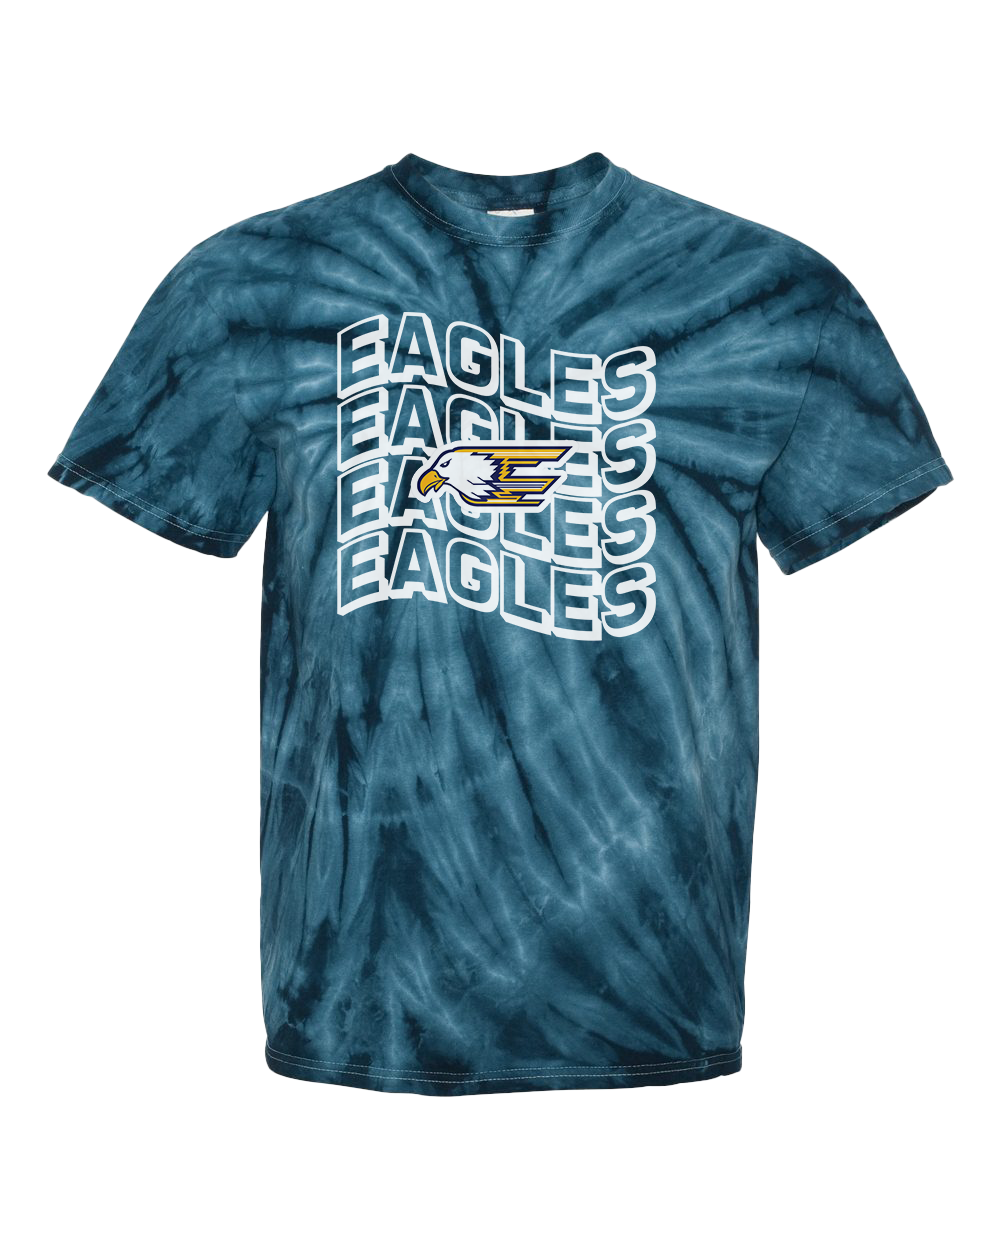 Delta Eagles Wavy Font Tie Dye Tshirt - Navy